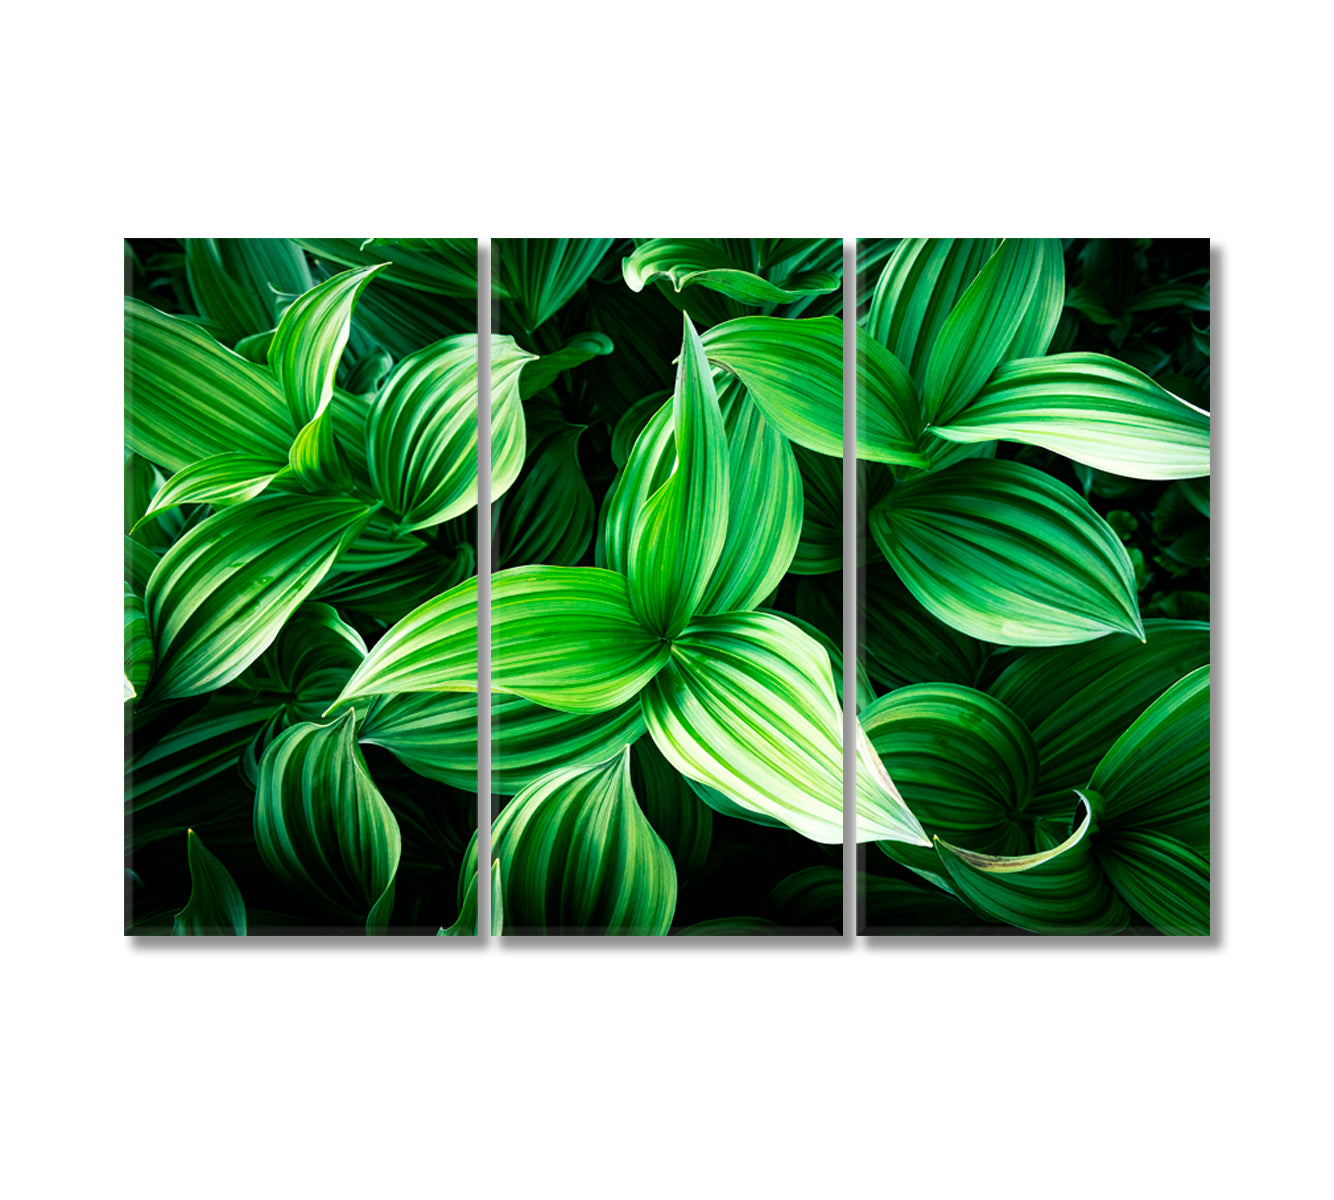 Leaves of Green Plants Canvas Print-Canvas Print-CetArt-3 Panels-36x24 inches-CetArt